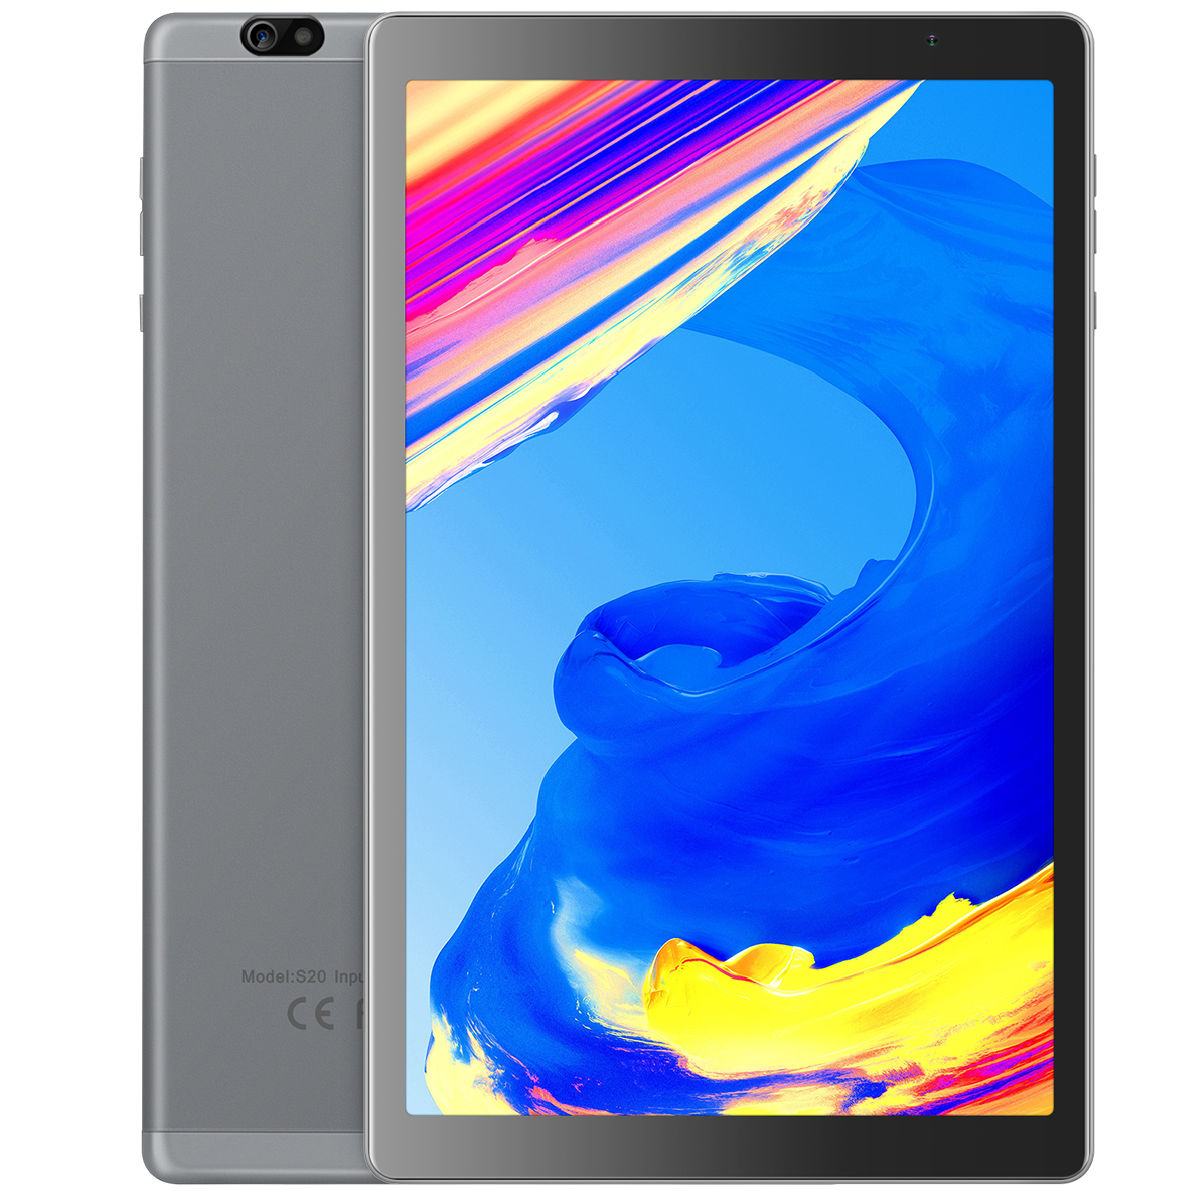 VANKYO MatrixPad S20 10 inch Tablet